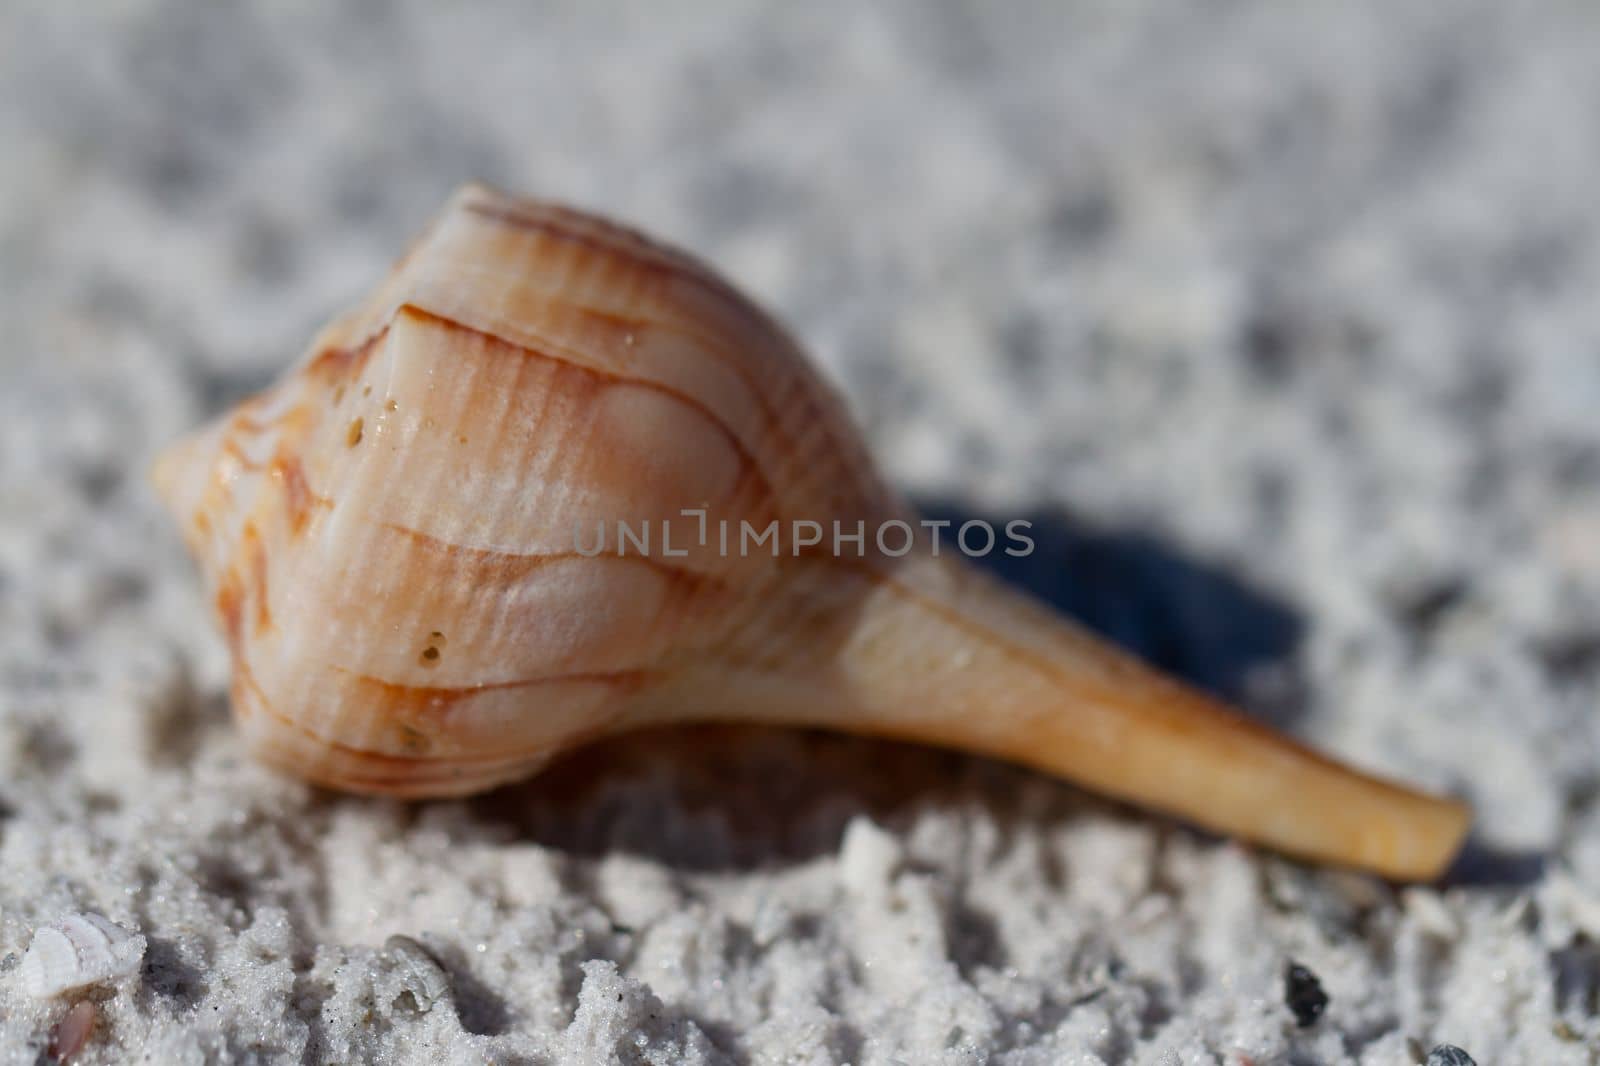 Lightning whelk shell, Sinistrofulgur perversum, found on a beach near Naples, Florida by Granchinho